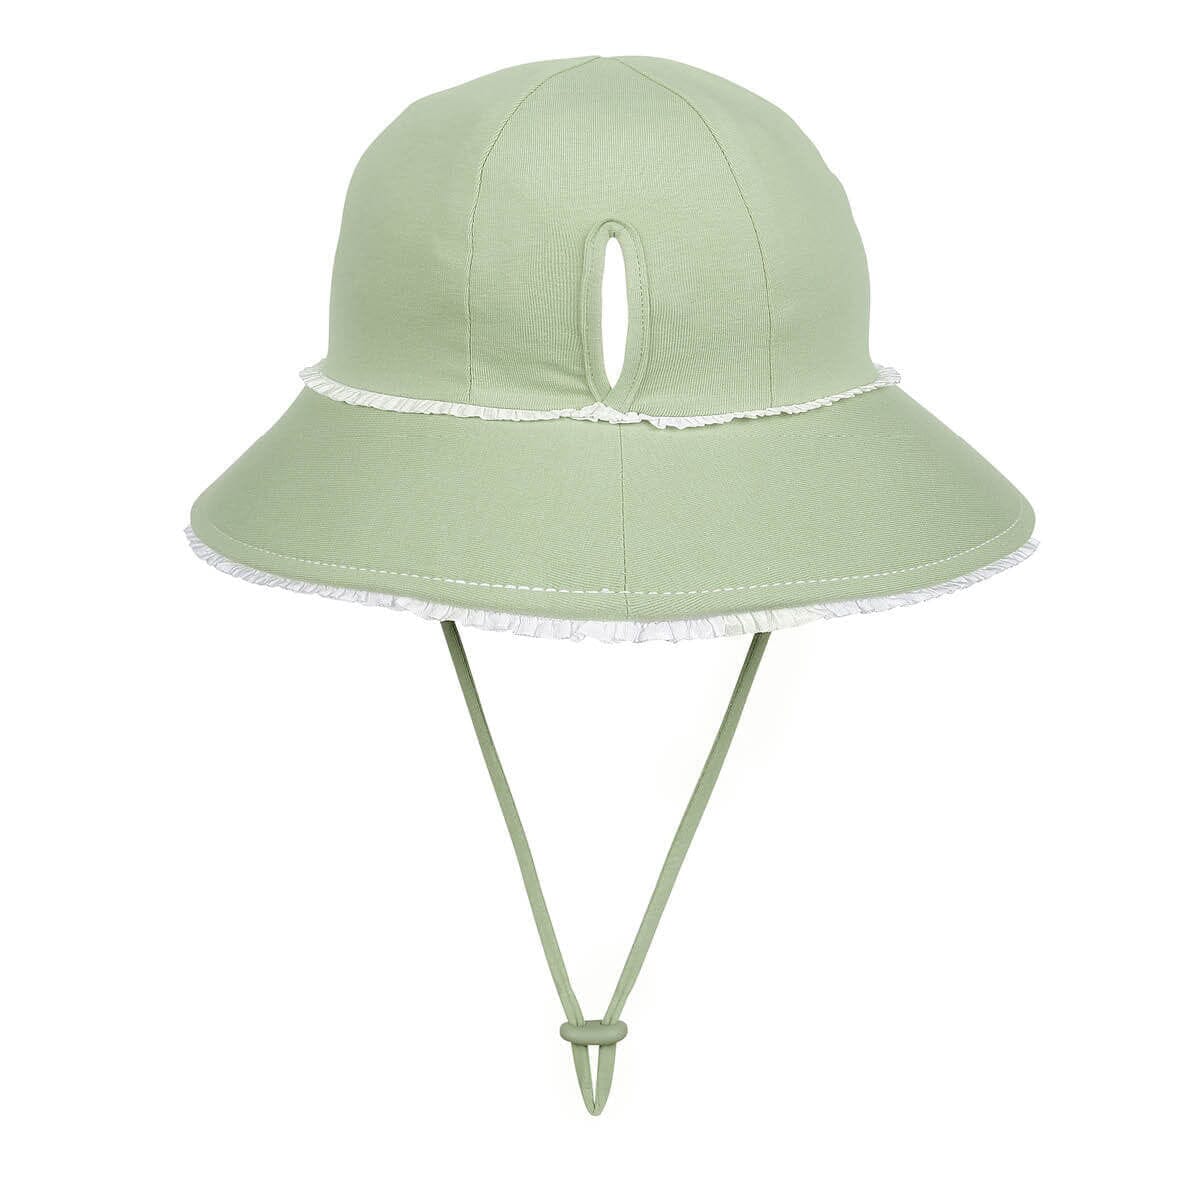 Bedhead - Kids Ponytail Trim Bucket Hat with Strap - Khaki Hats Bedhead 